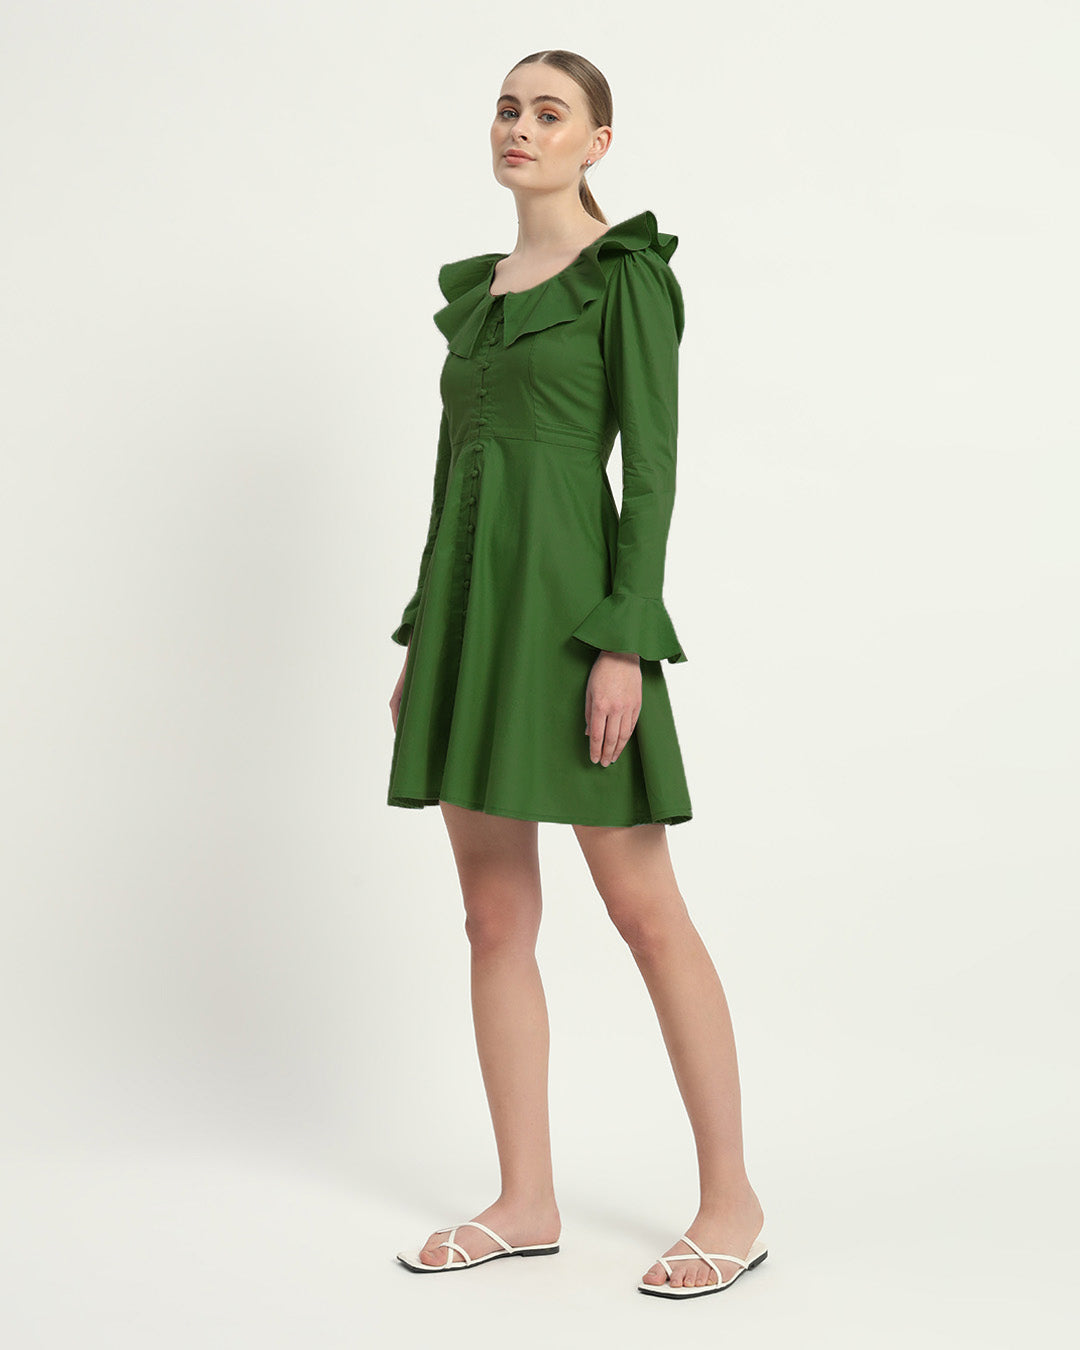 The Emerald Fredonia Cotton Dress